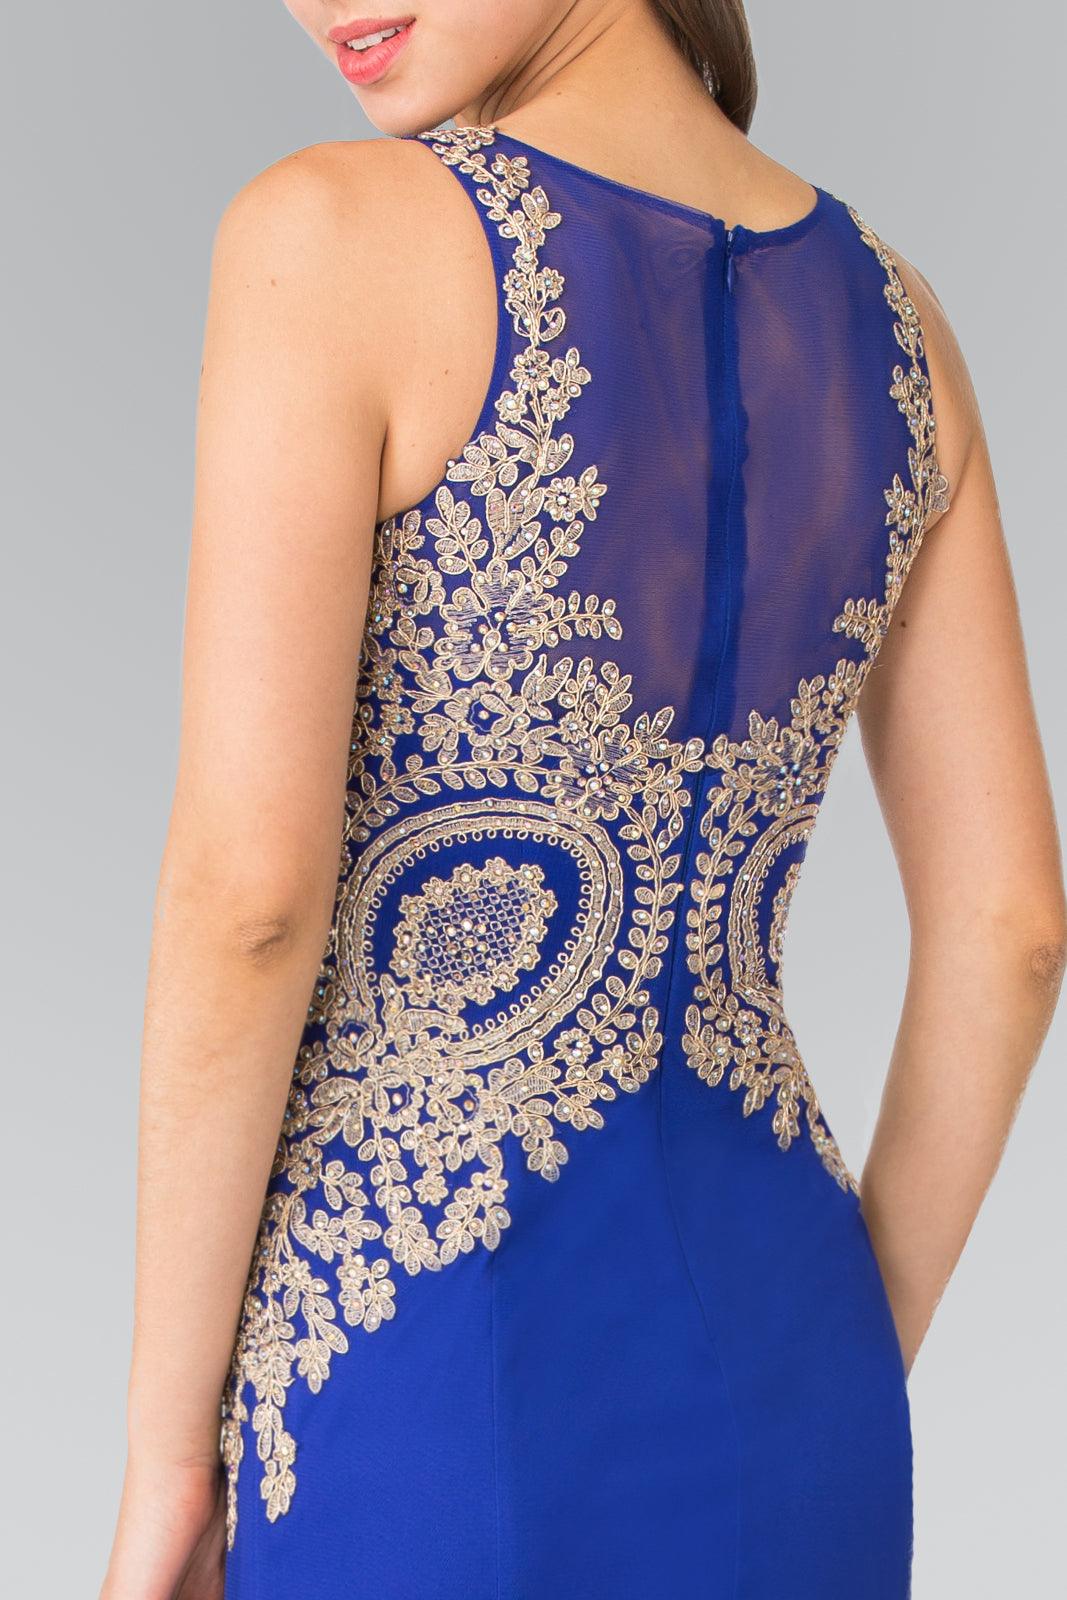 Embroidered Boidce Long Prom Dress with Sheer Back - The Dress Outlet Elizabeth K